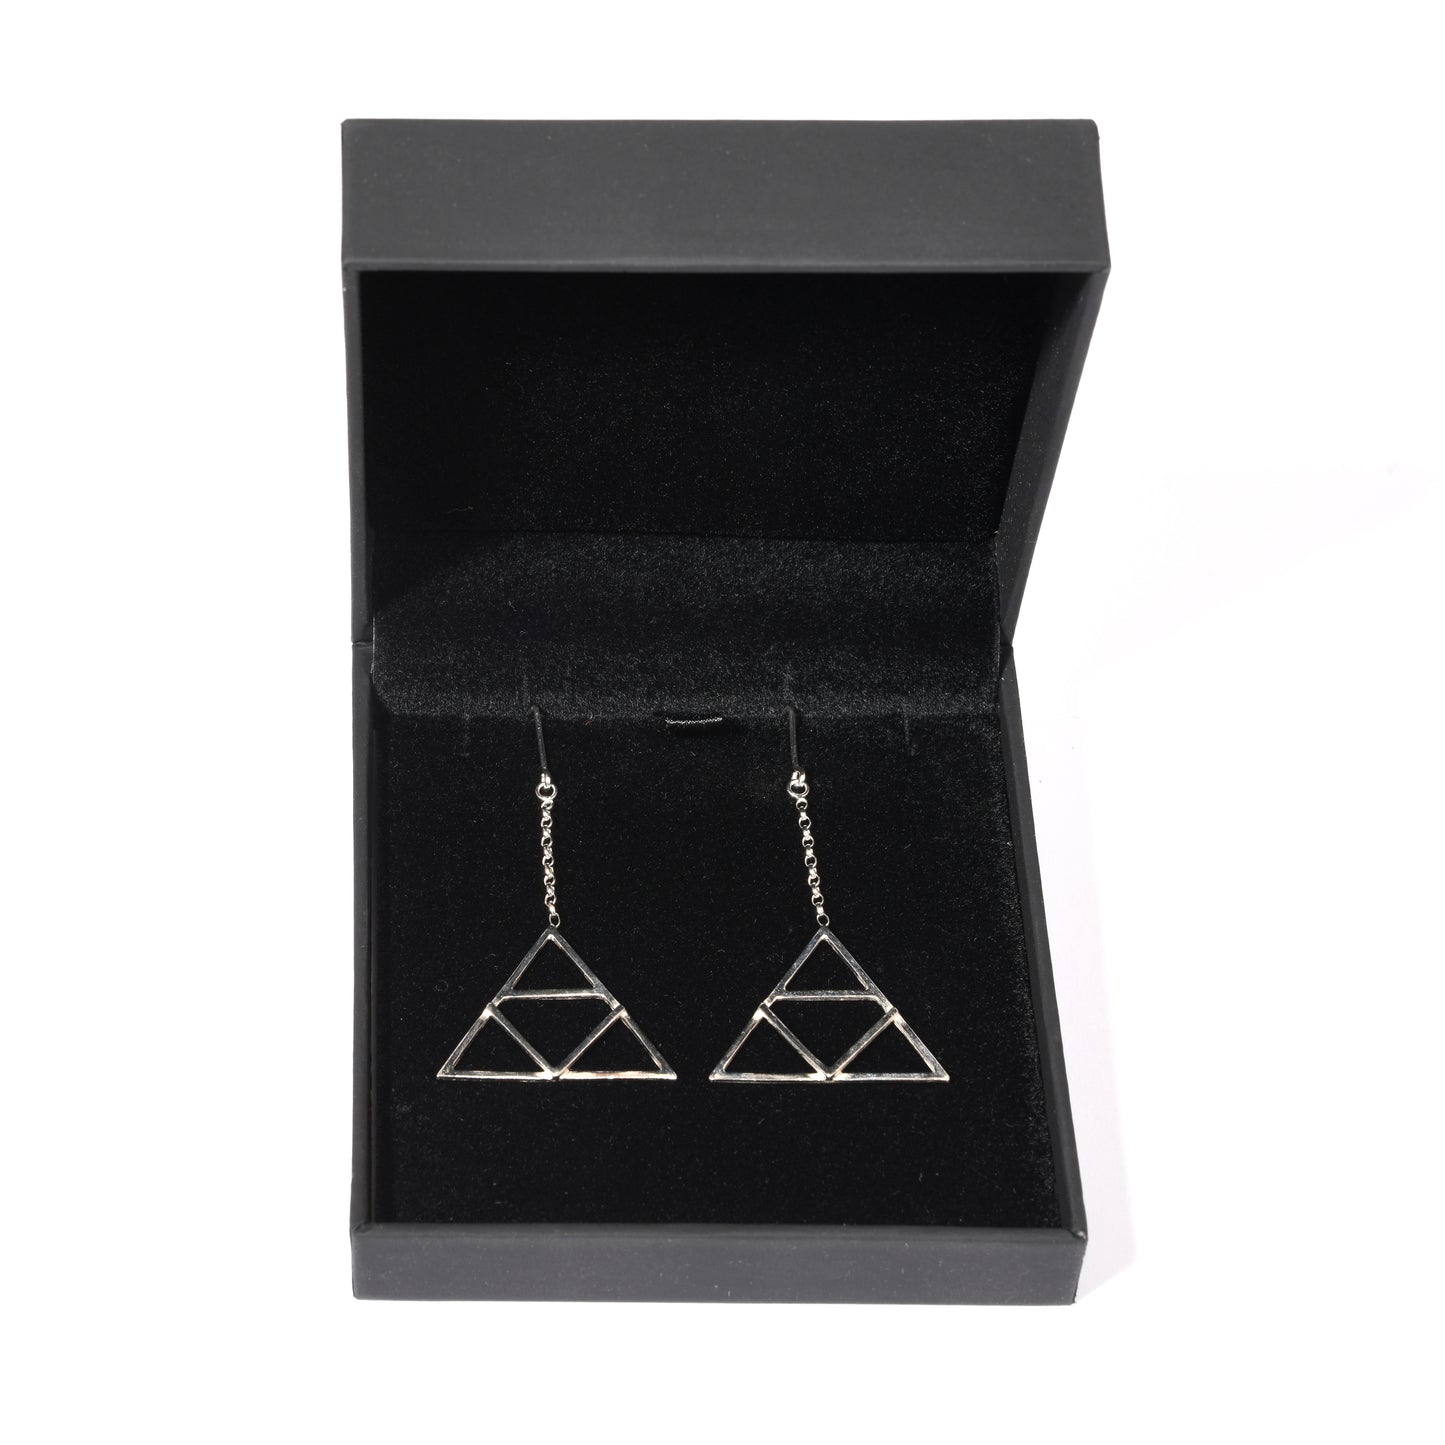 Silver Triangular Earrings